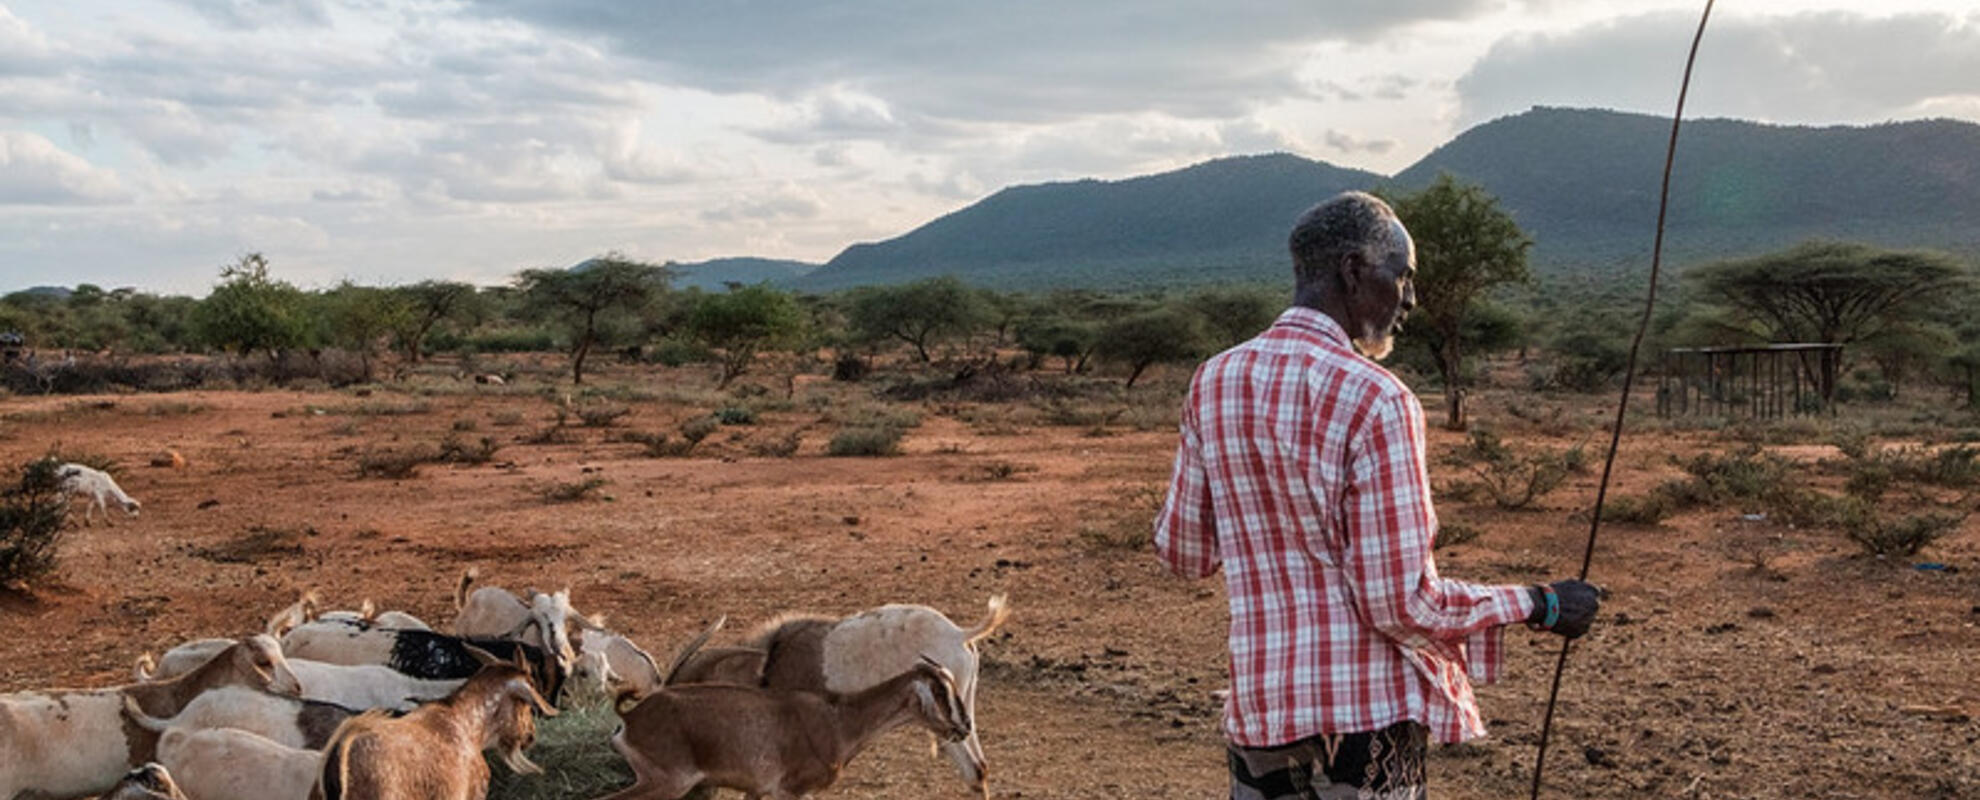 A Samburu pastoralist and his animals